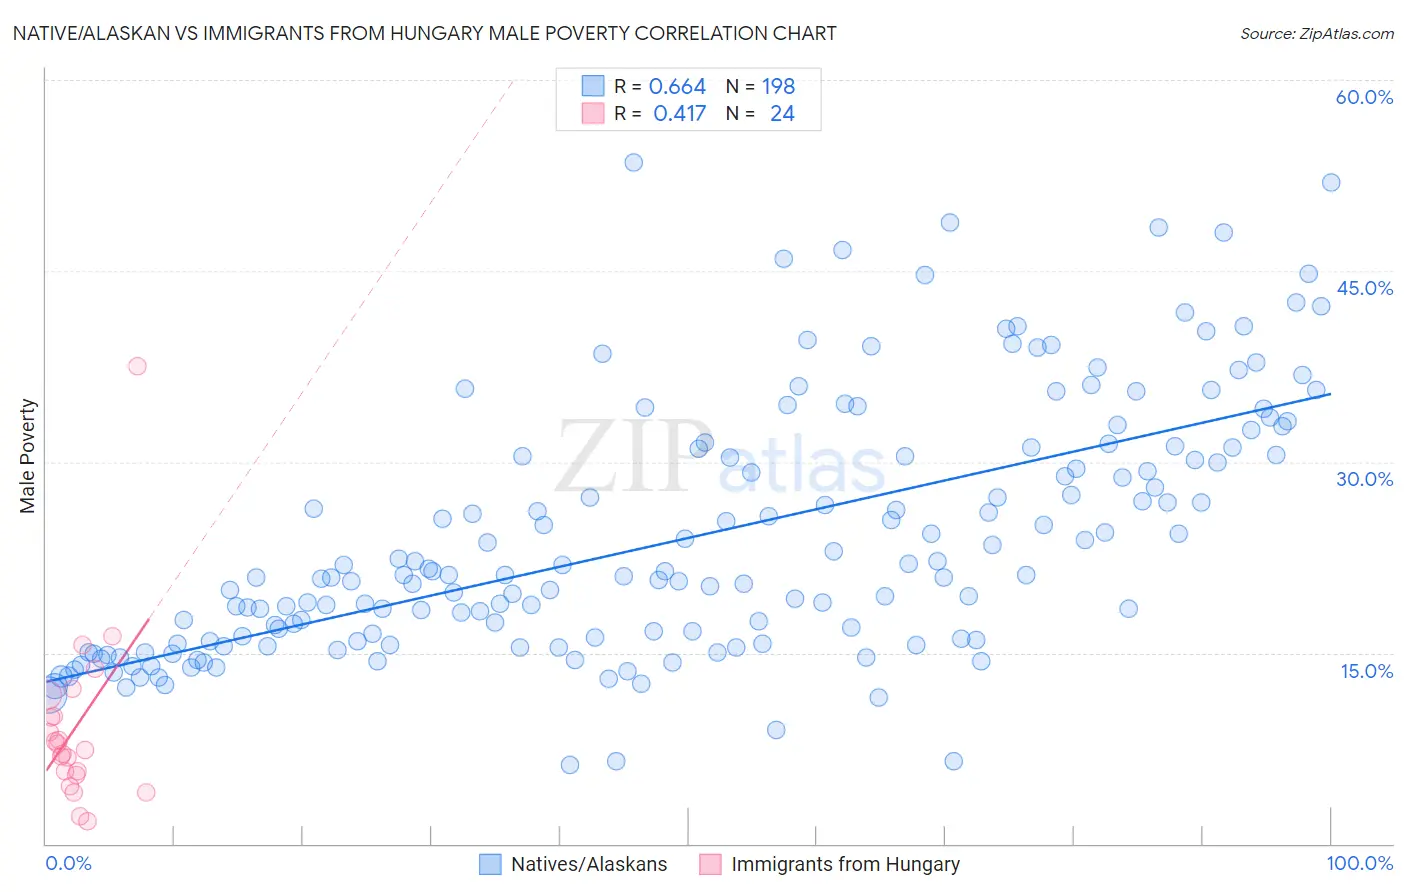 Native/Alaskan vs Immigrants from Hungary Male Poverty